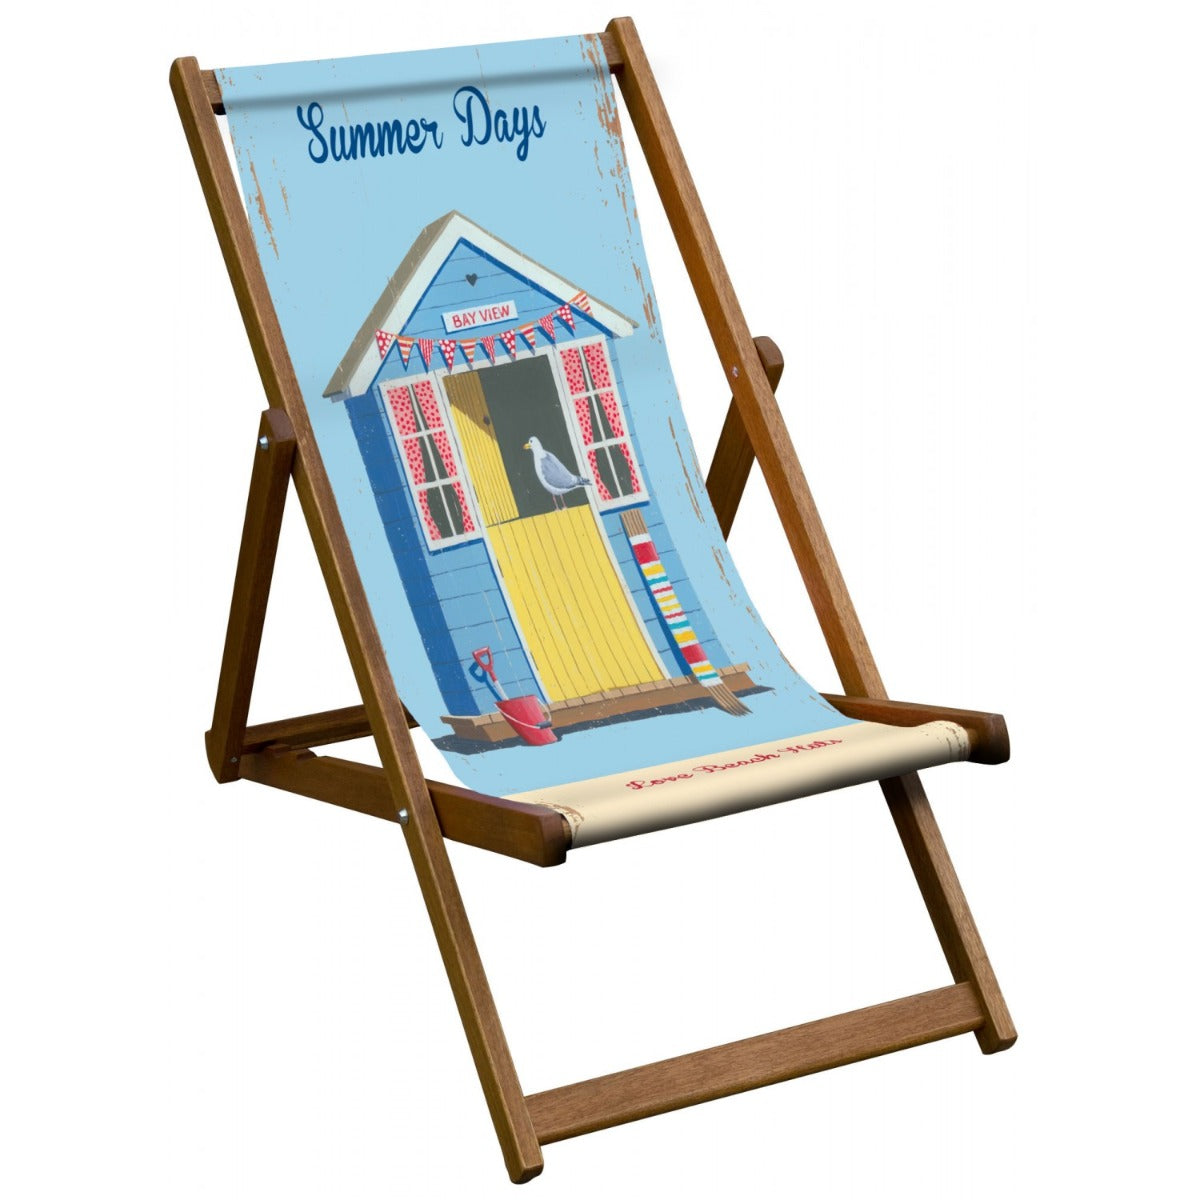 Vintage Inspired Wooden Deckchair with 'Summer Days' by Martin Wiscombe